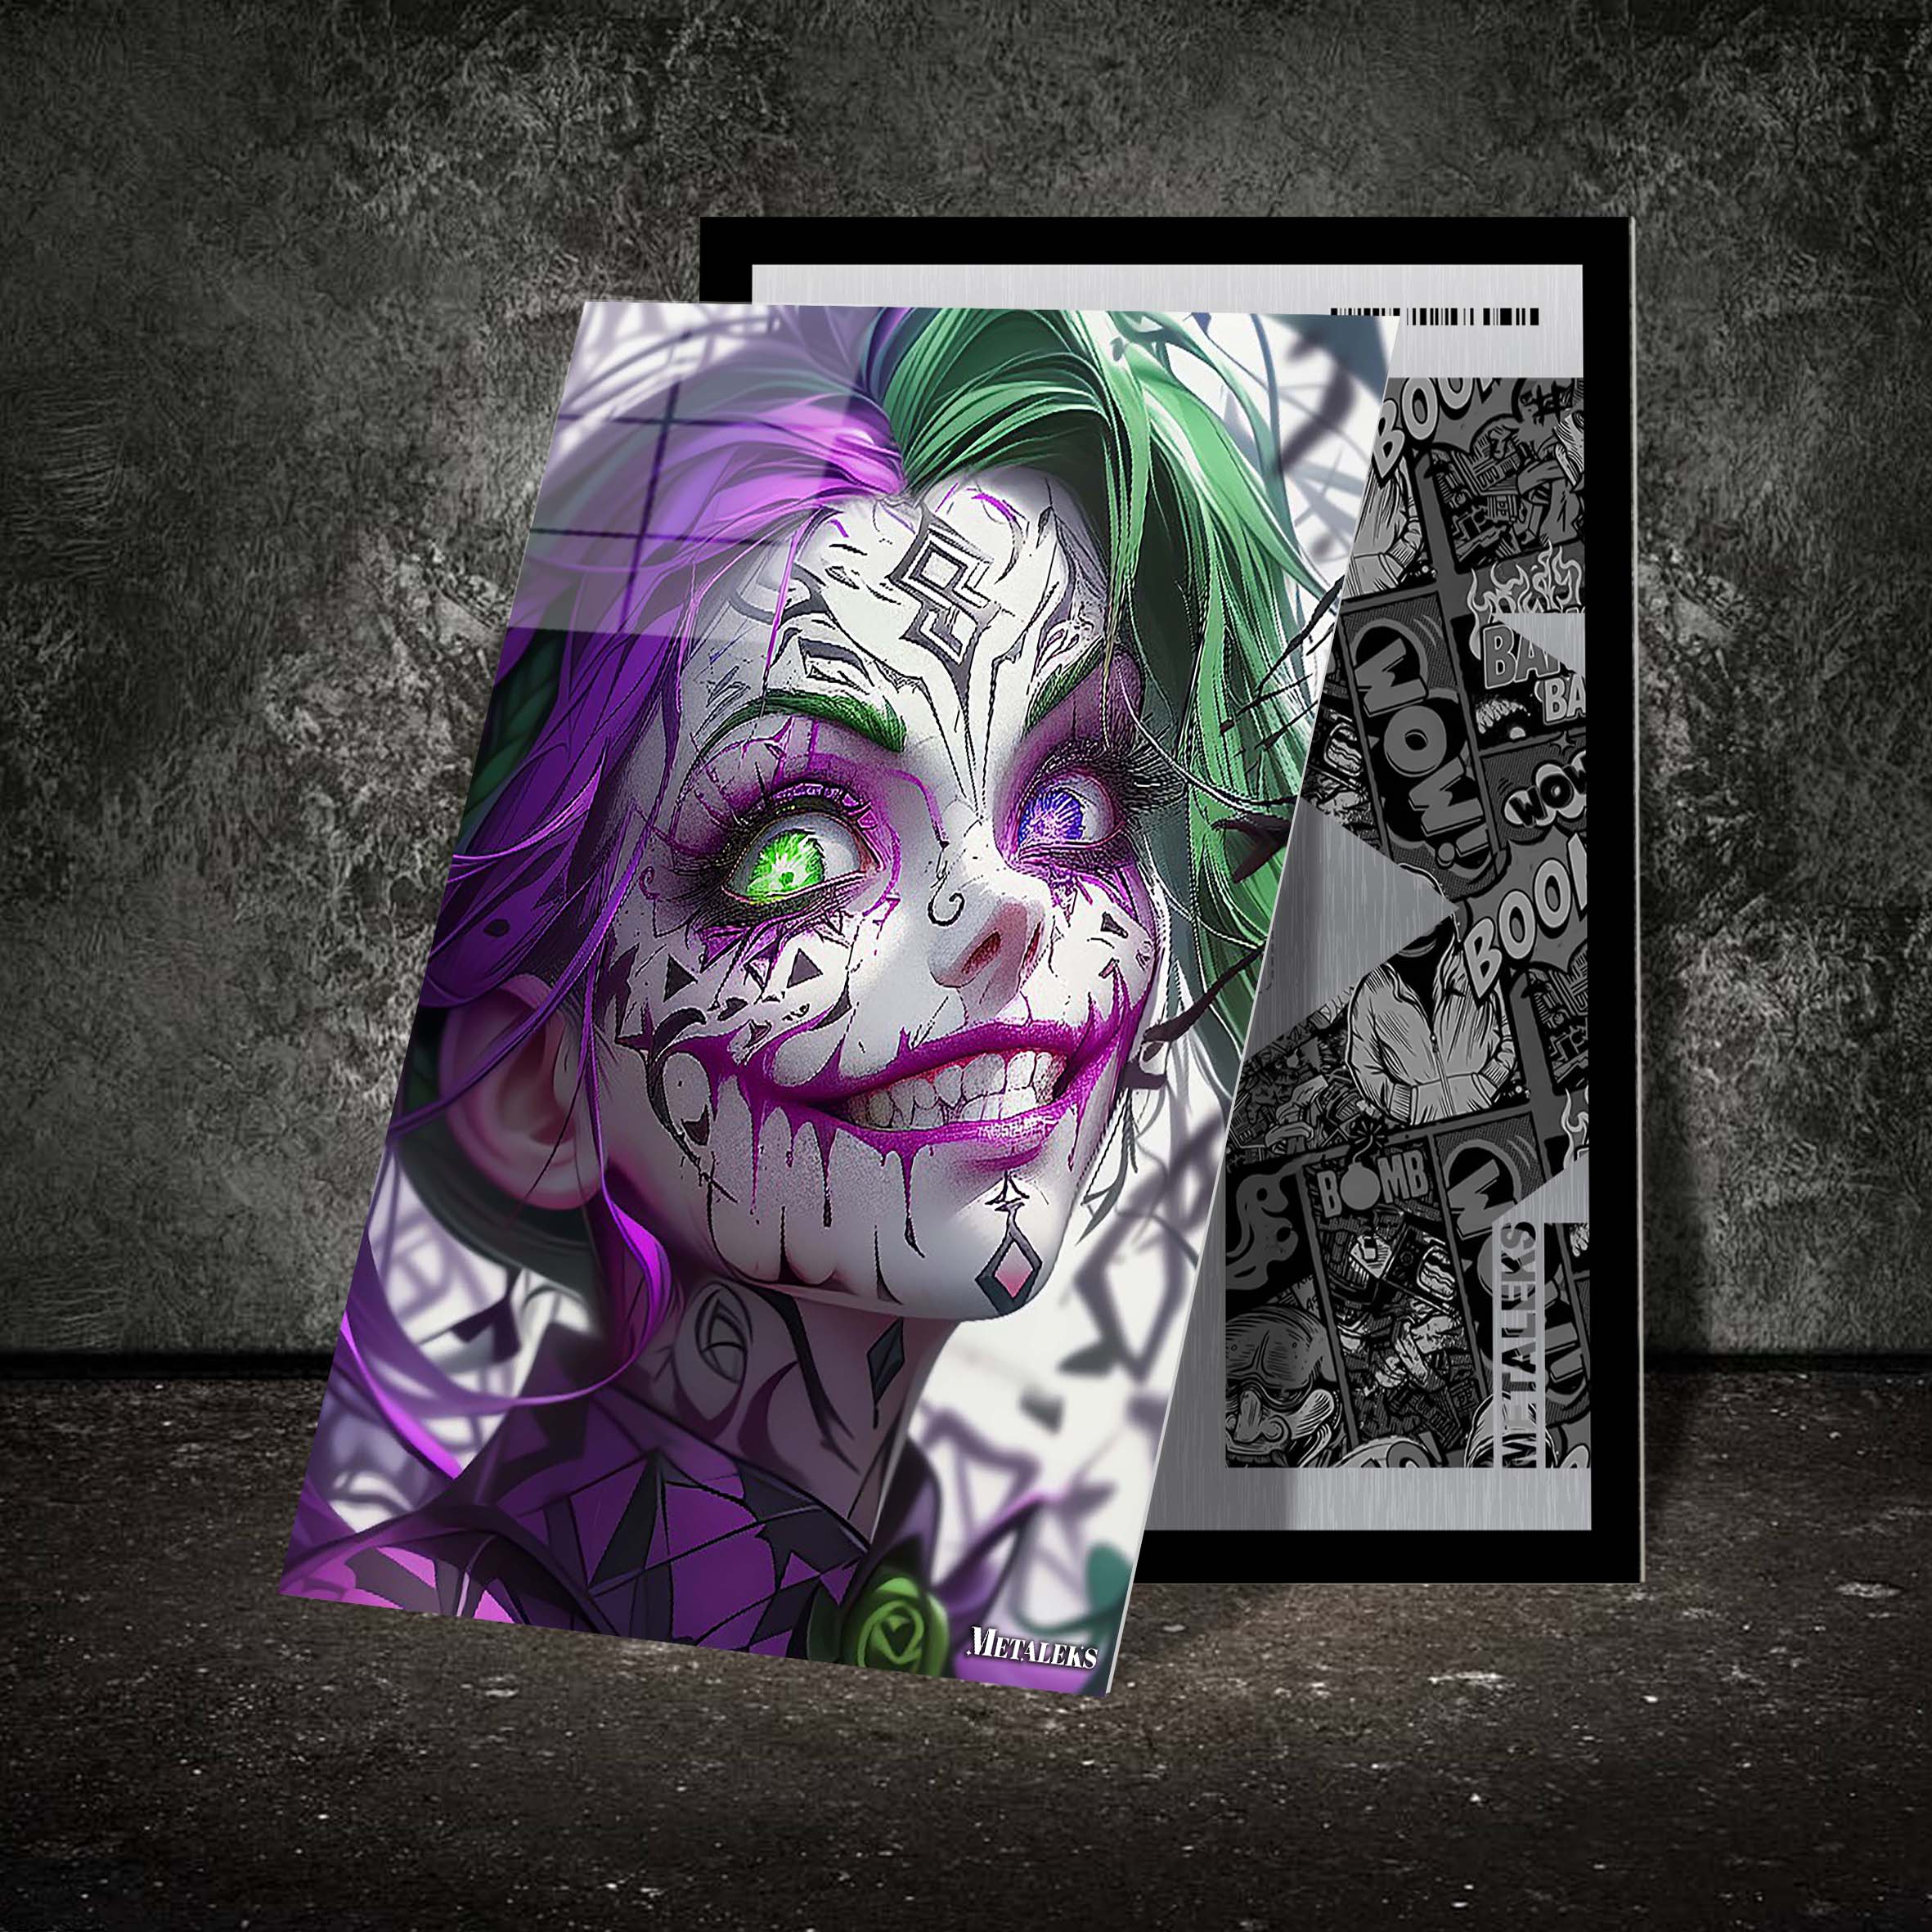 Lady Joker-designed by @Vizio